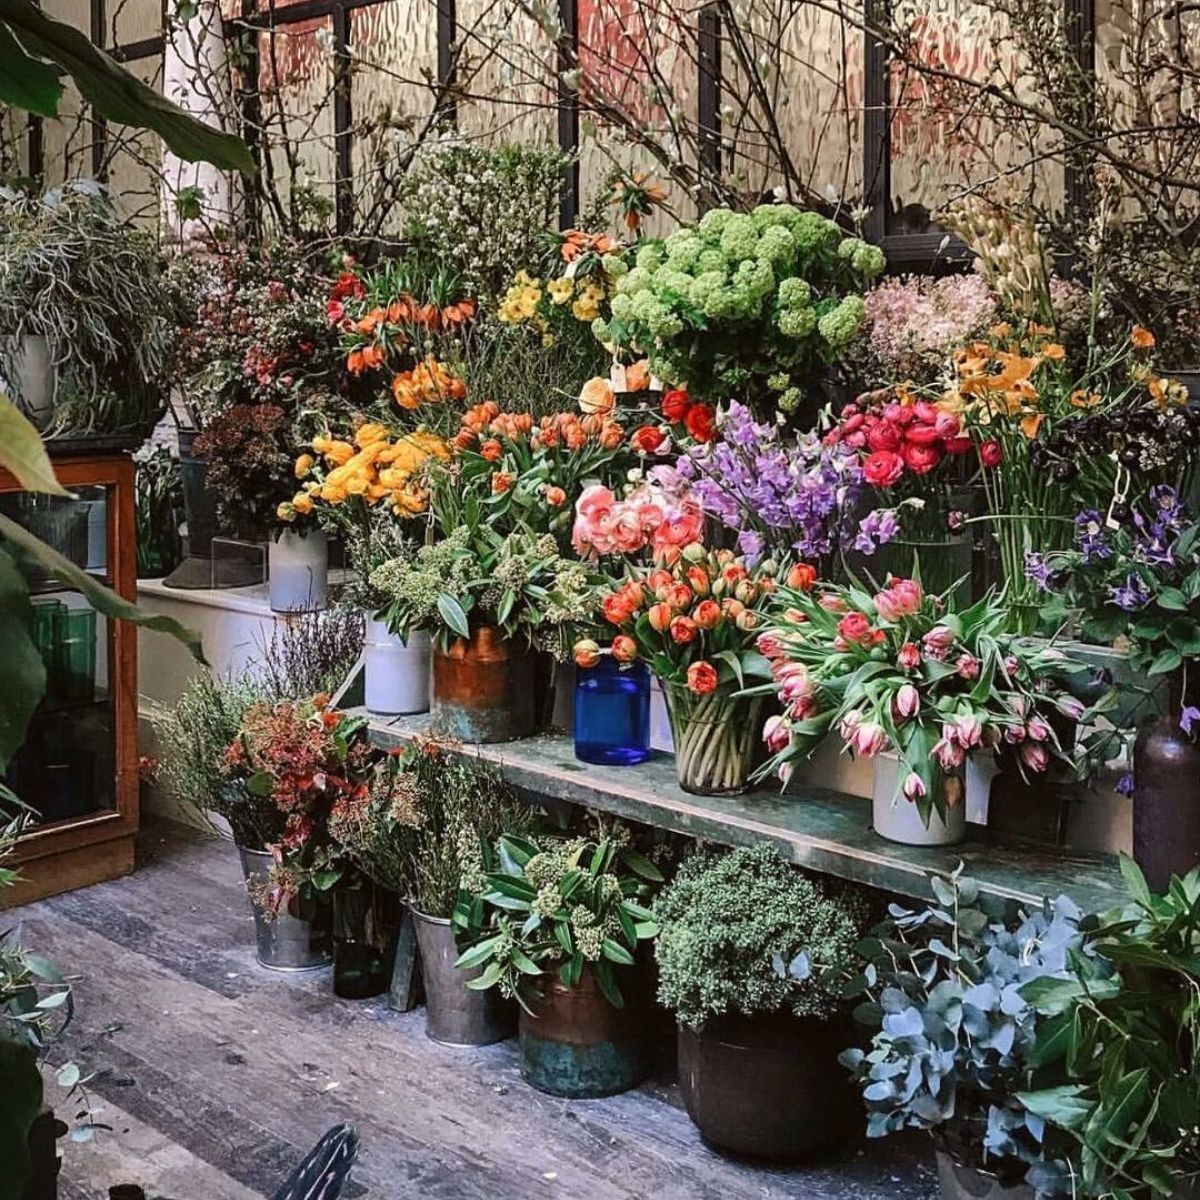 Amazing flower shops featured on Thursd